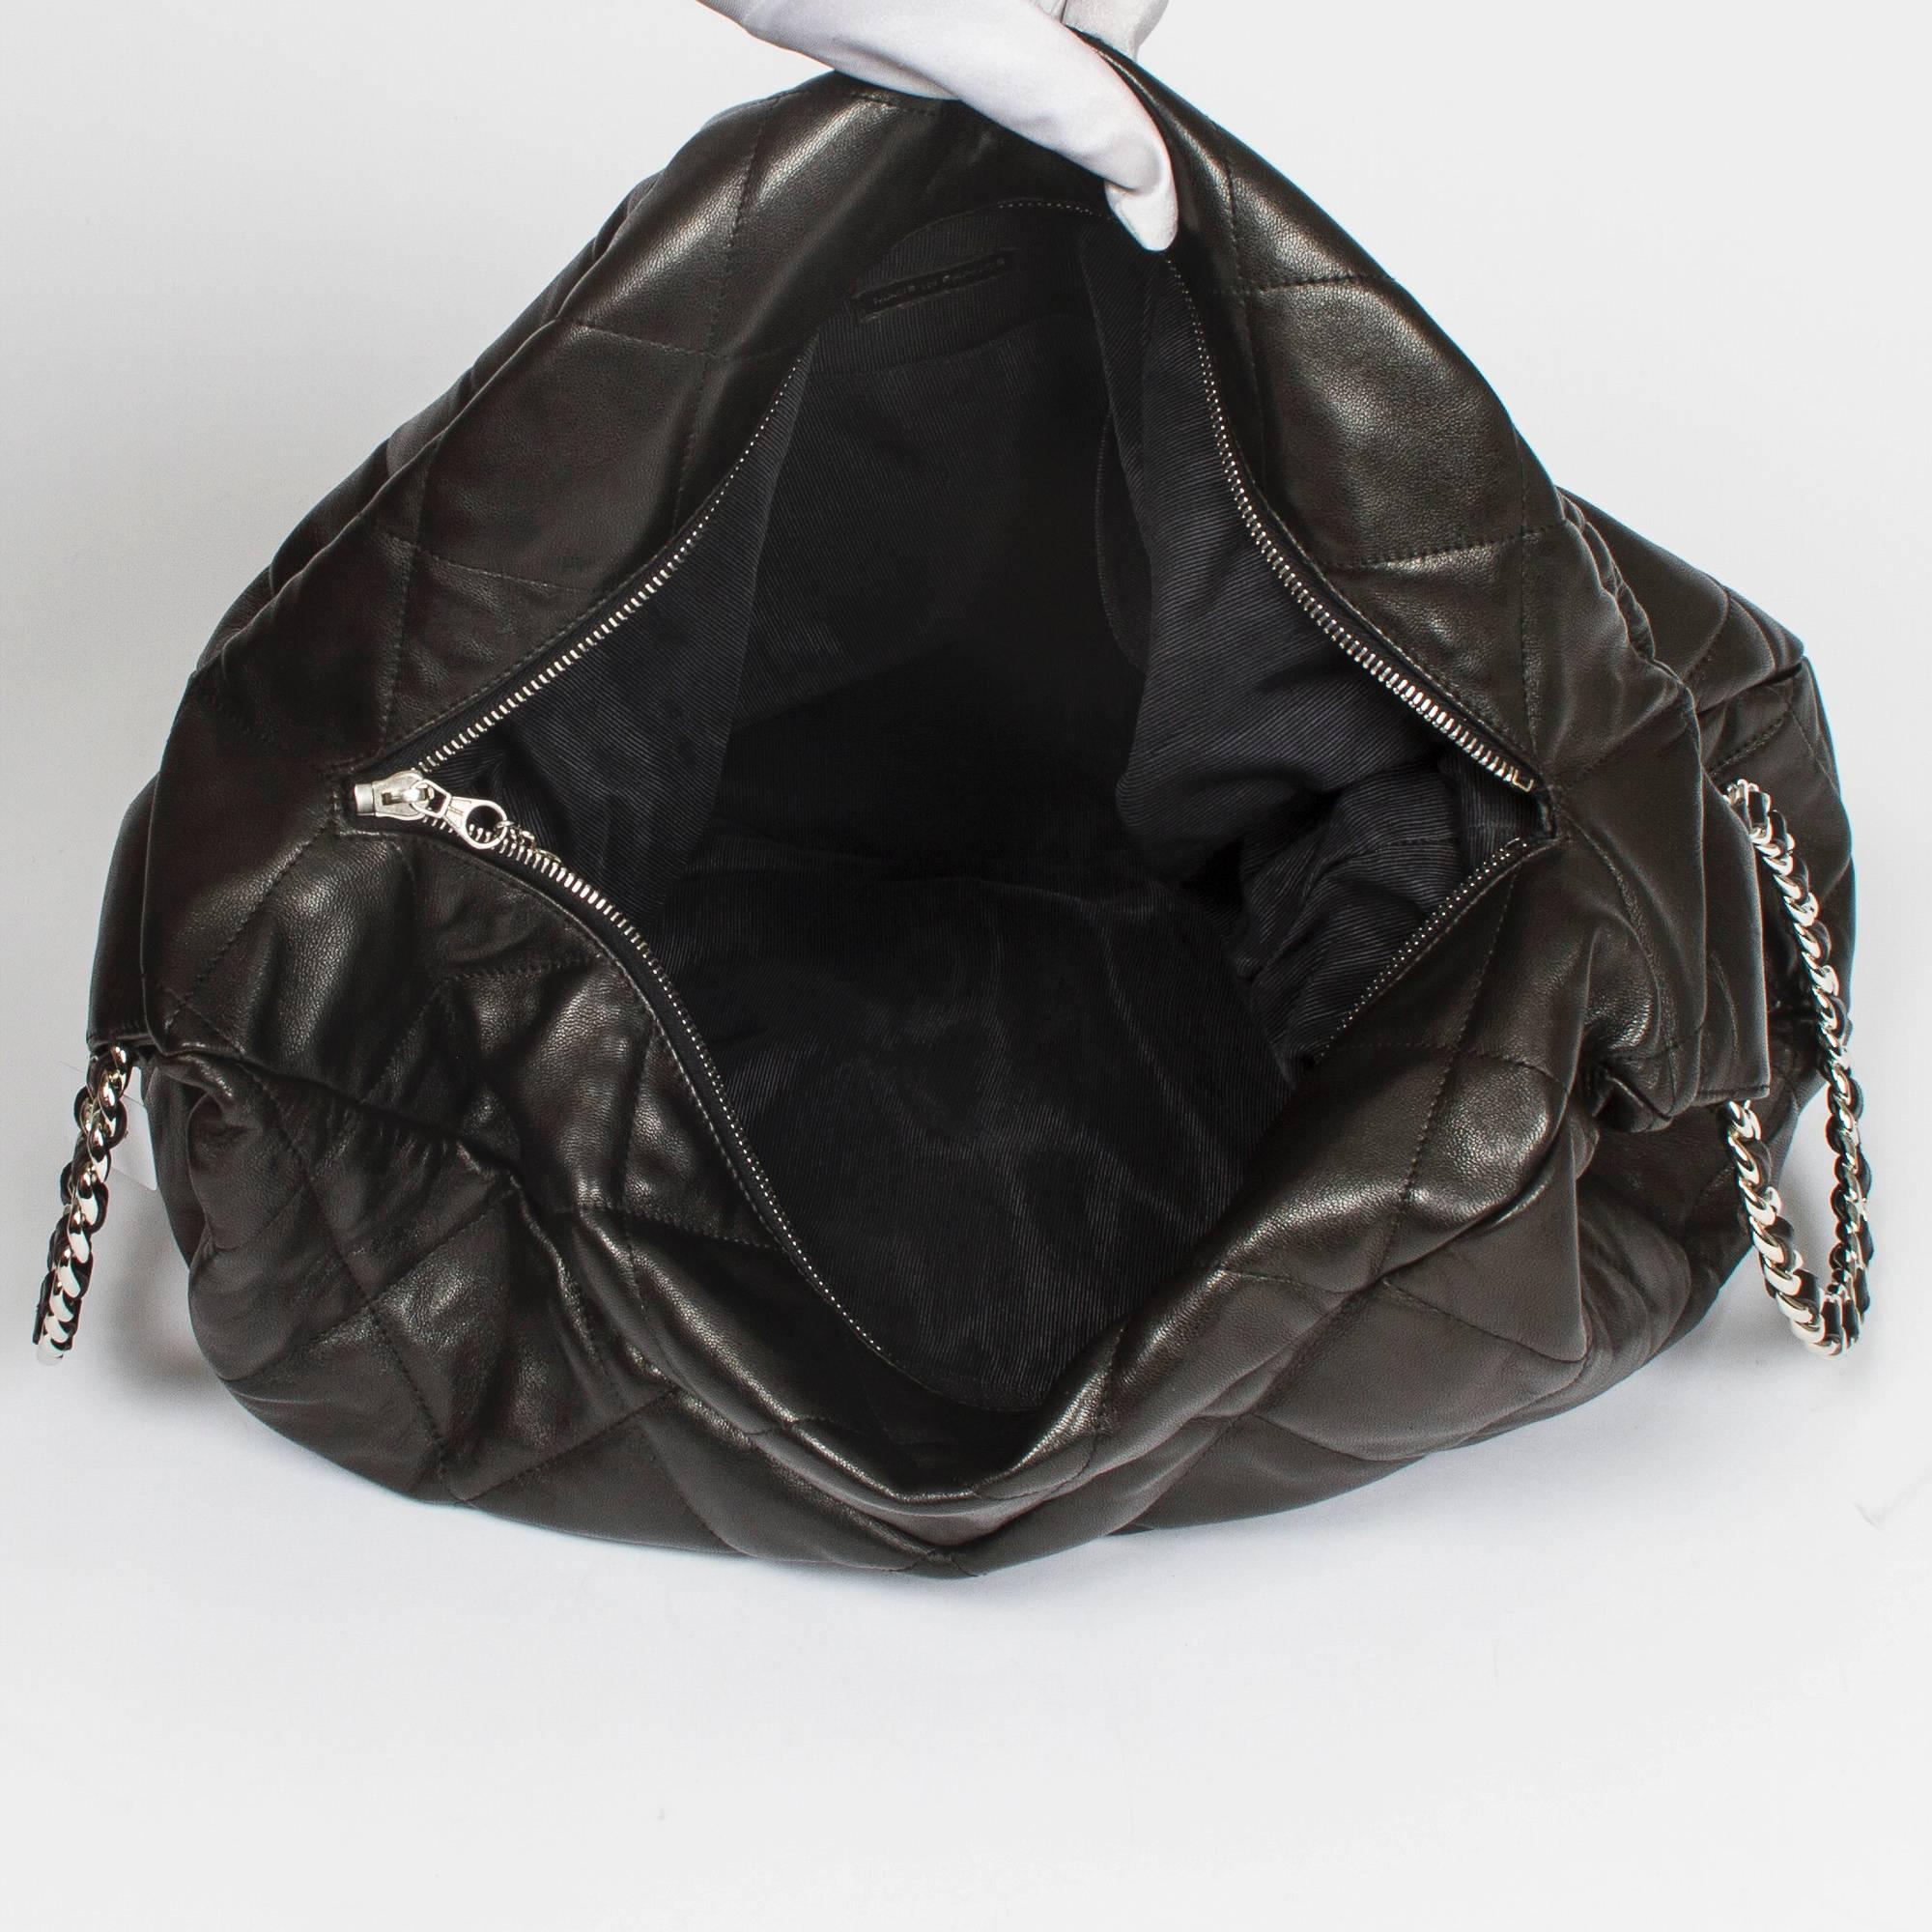 Chanel Hobo Handbag Black Quilted leather 1